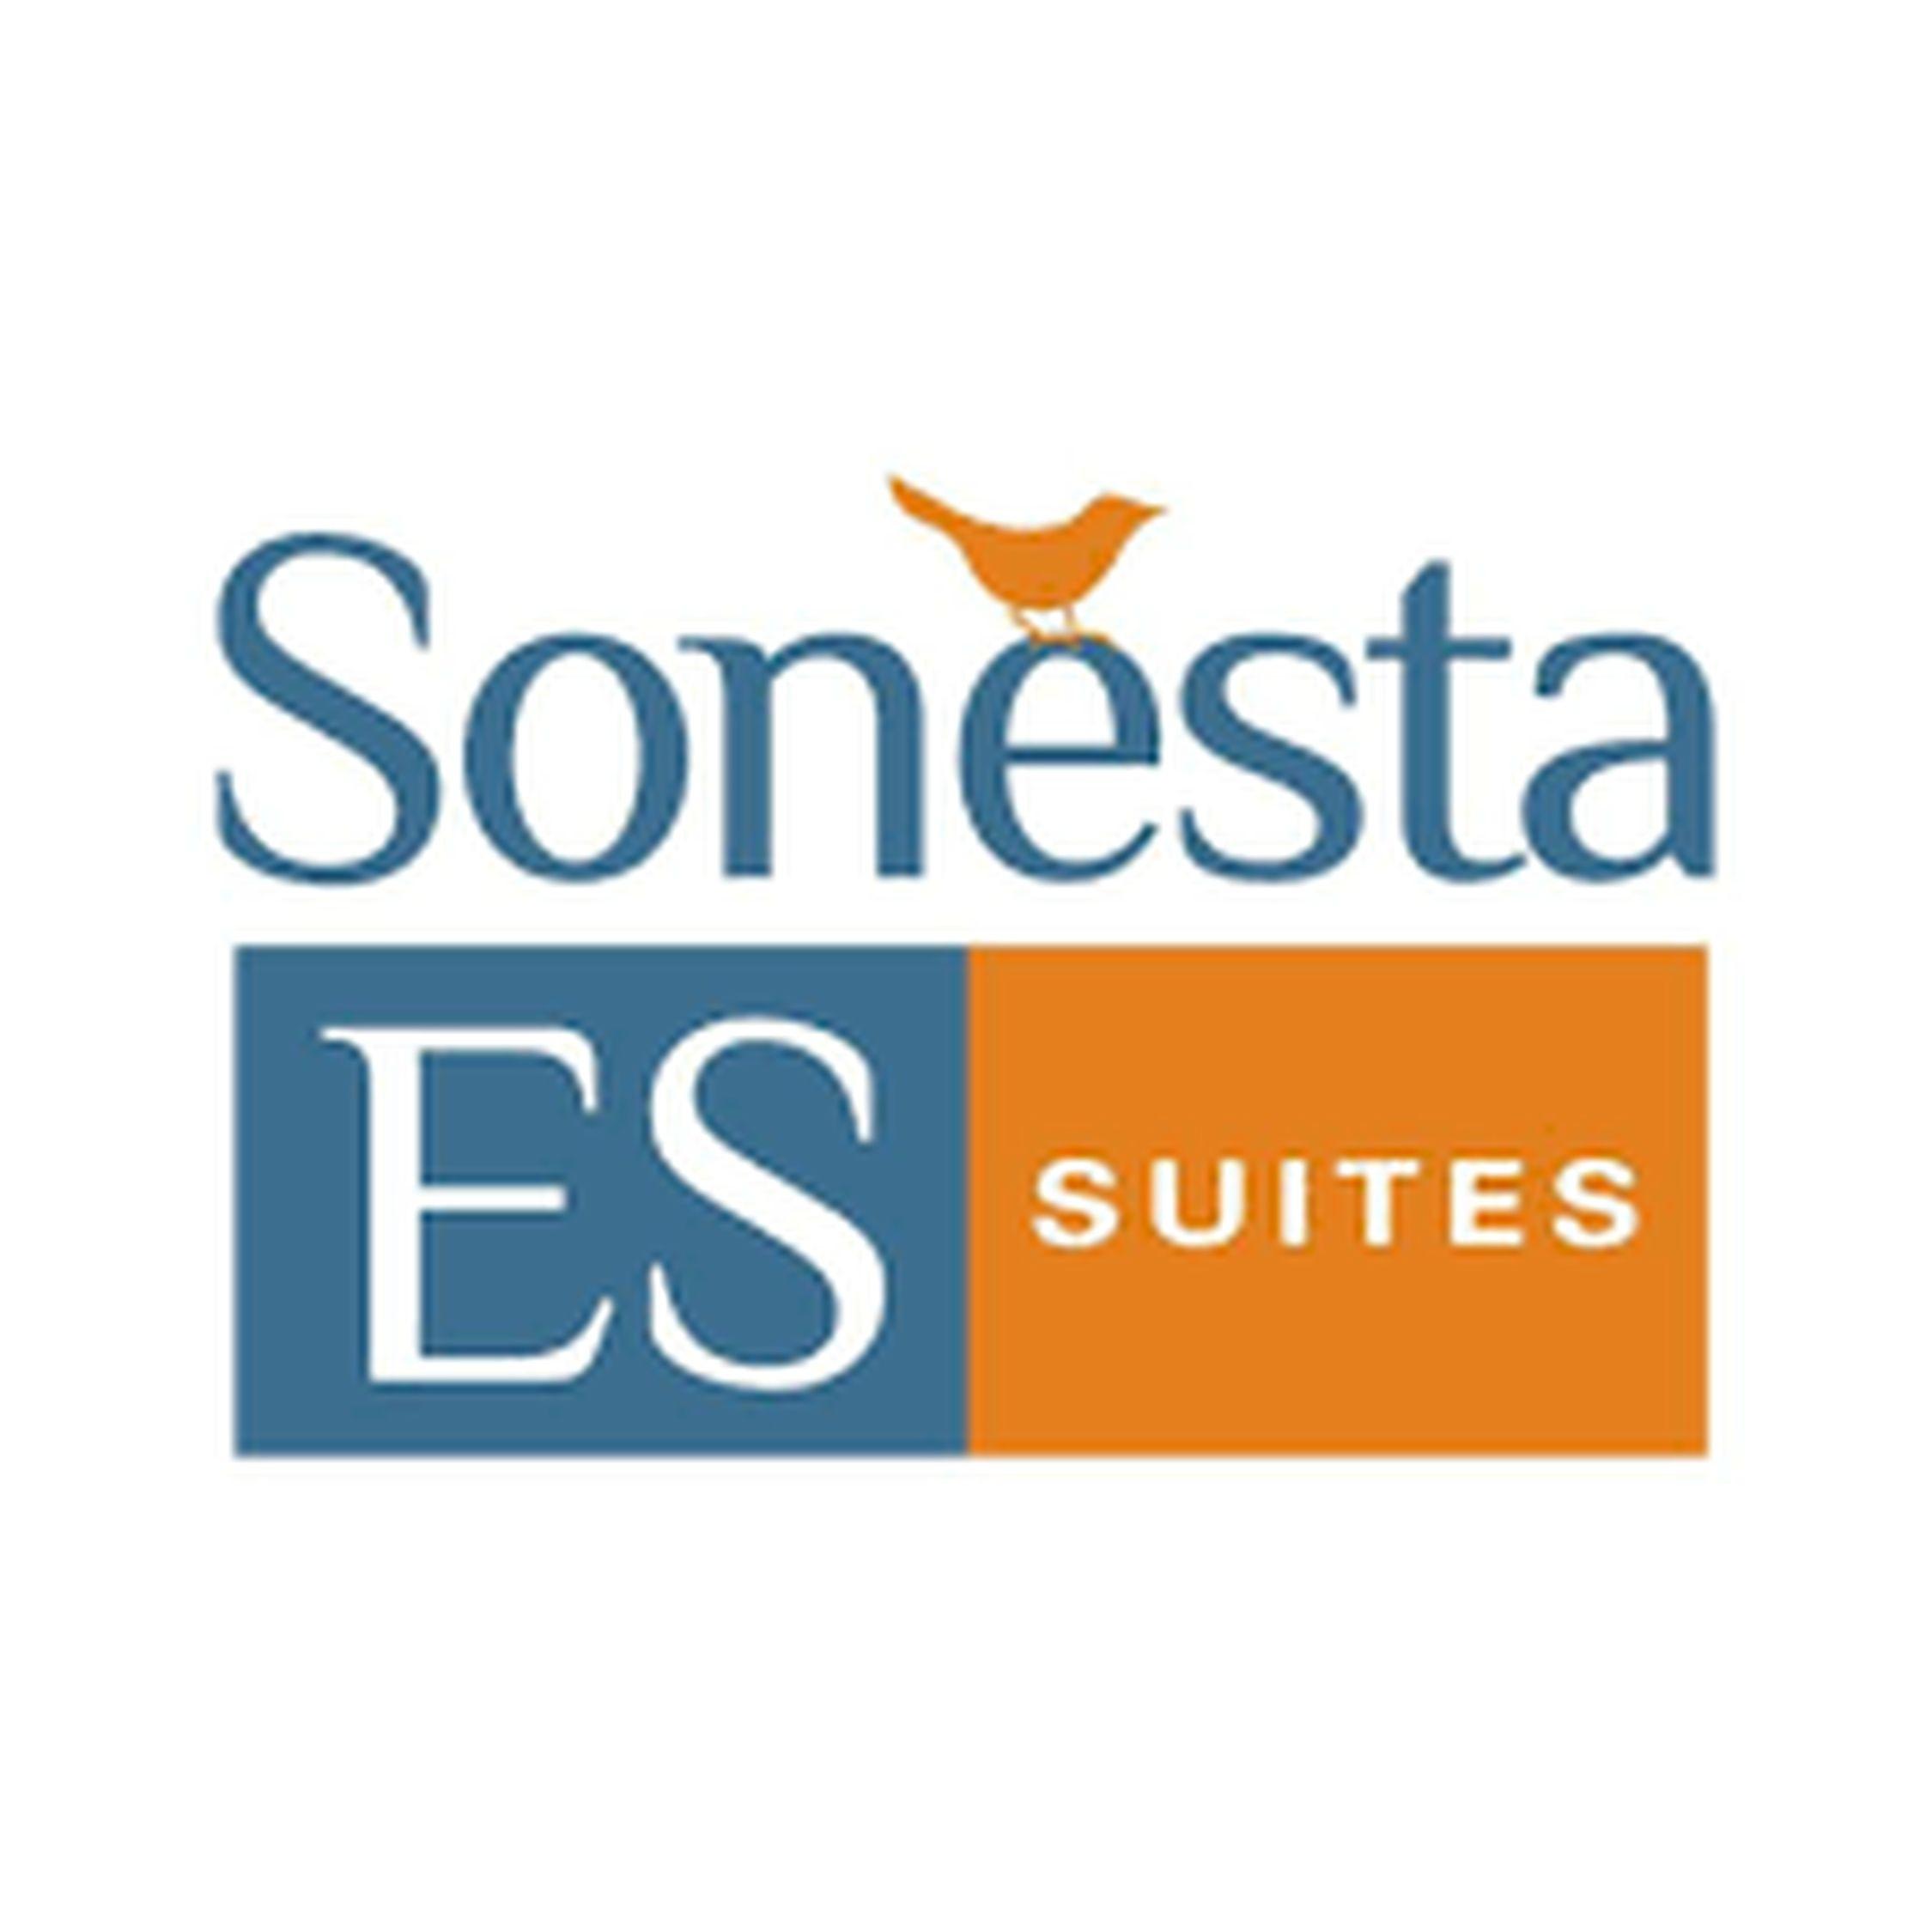 Sonesta ES Suites Flagstaff - Flagstaff, AZ 86004 - (928)526-5555 | ShowMeLocal.com